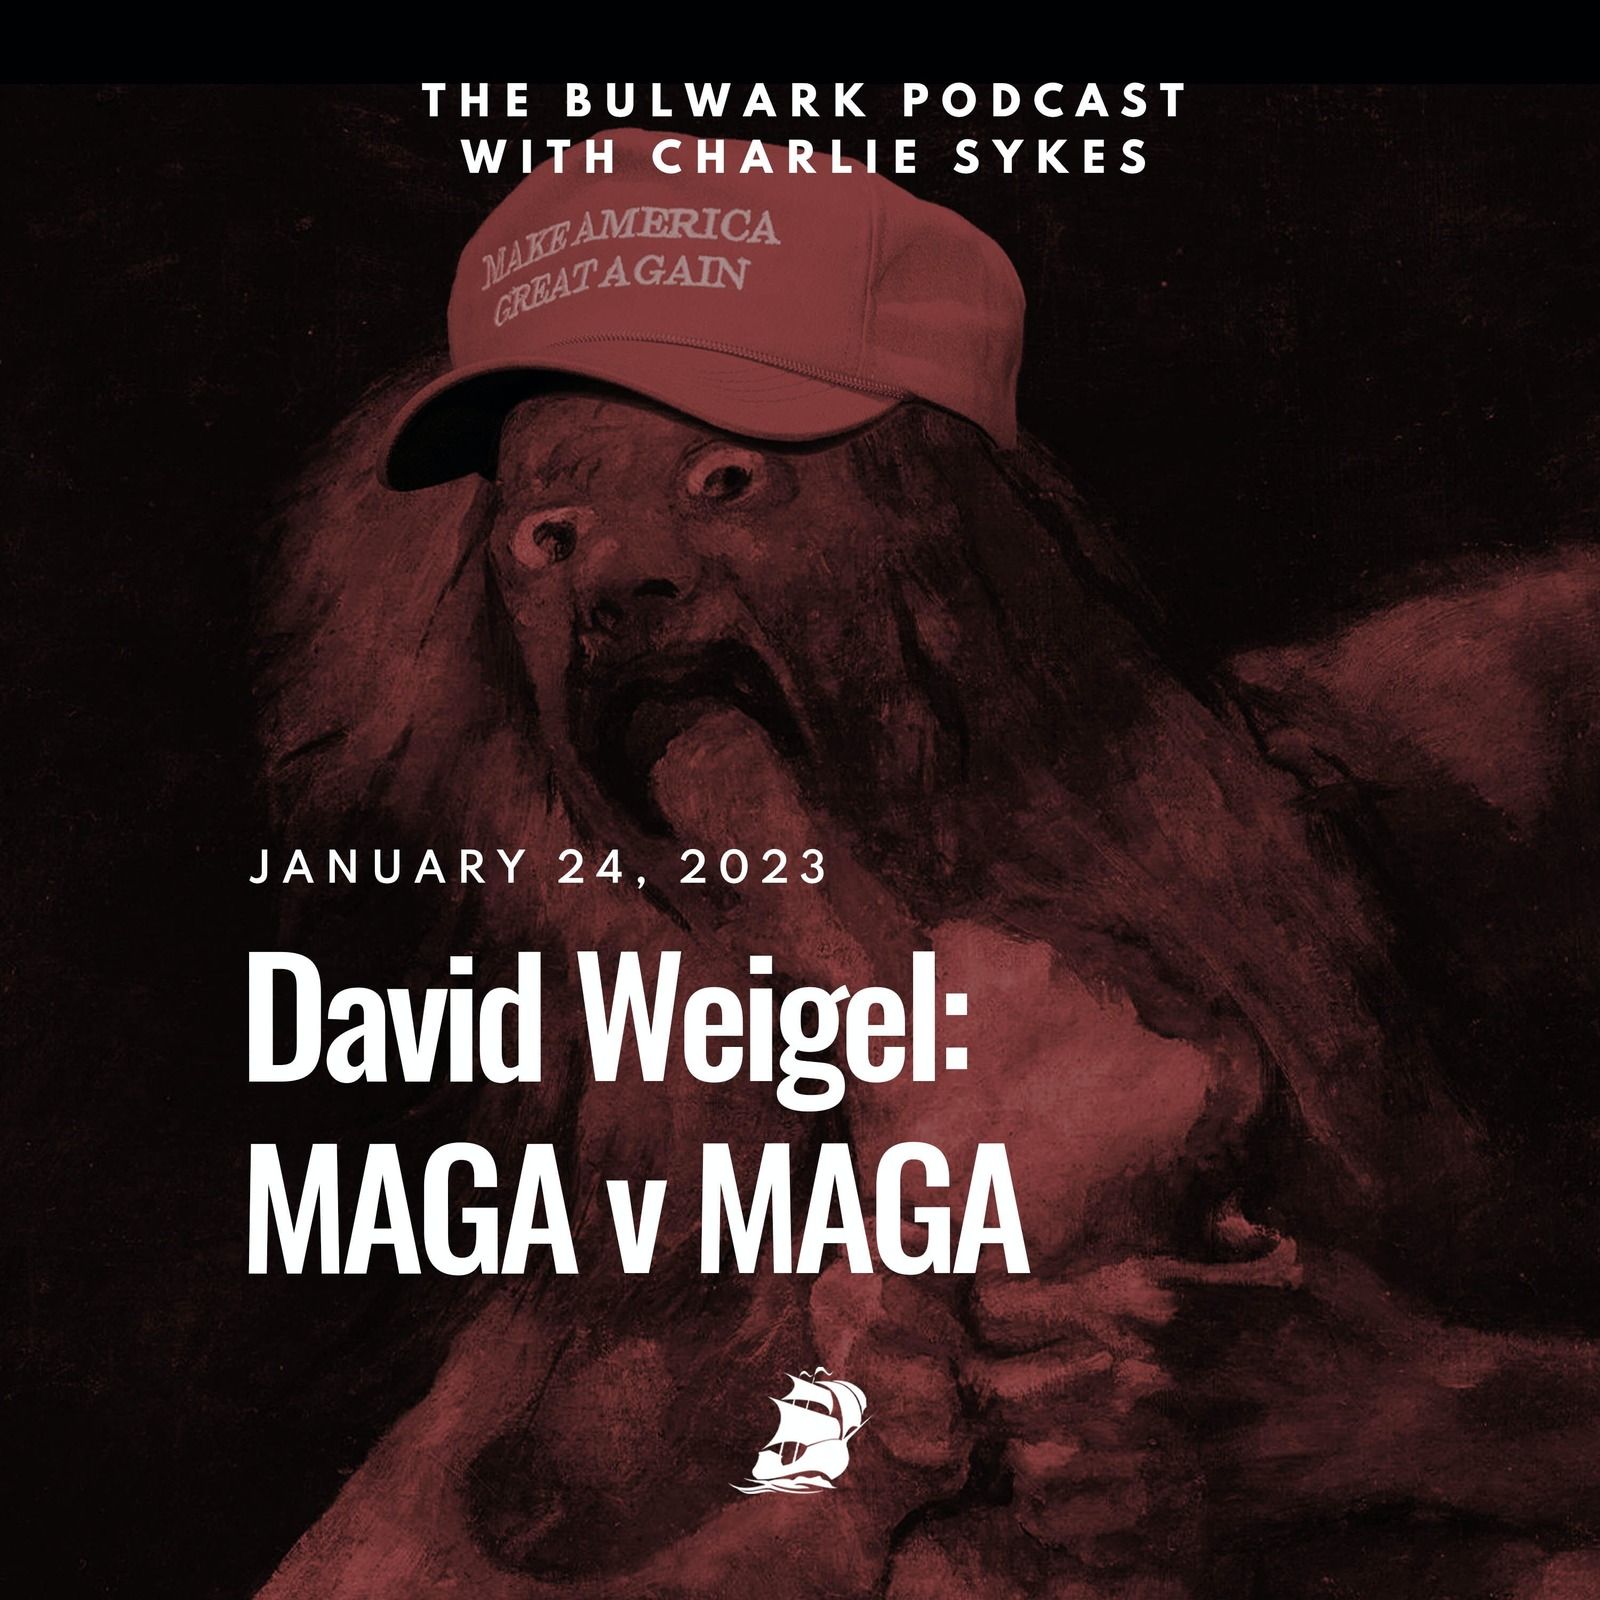 David Weigel: MAGA v MAGA by The Bulwark Podcast